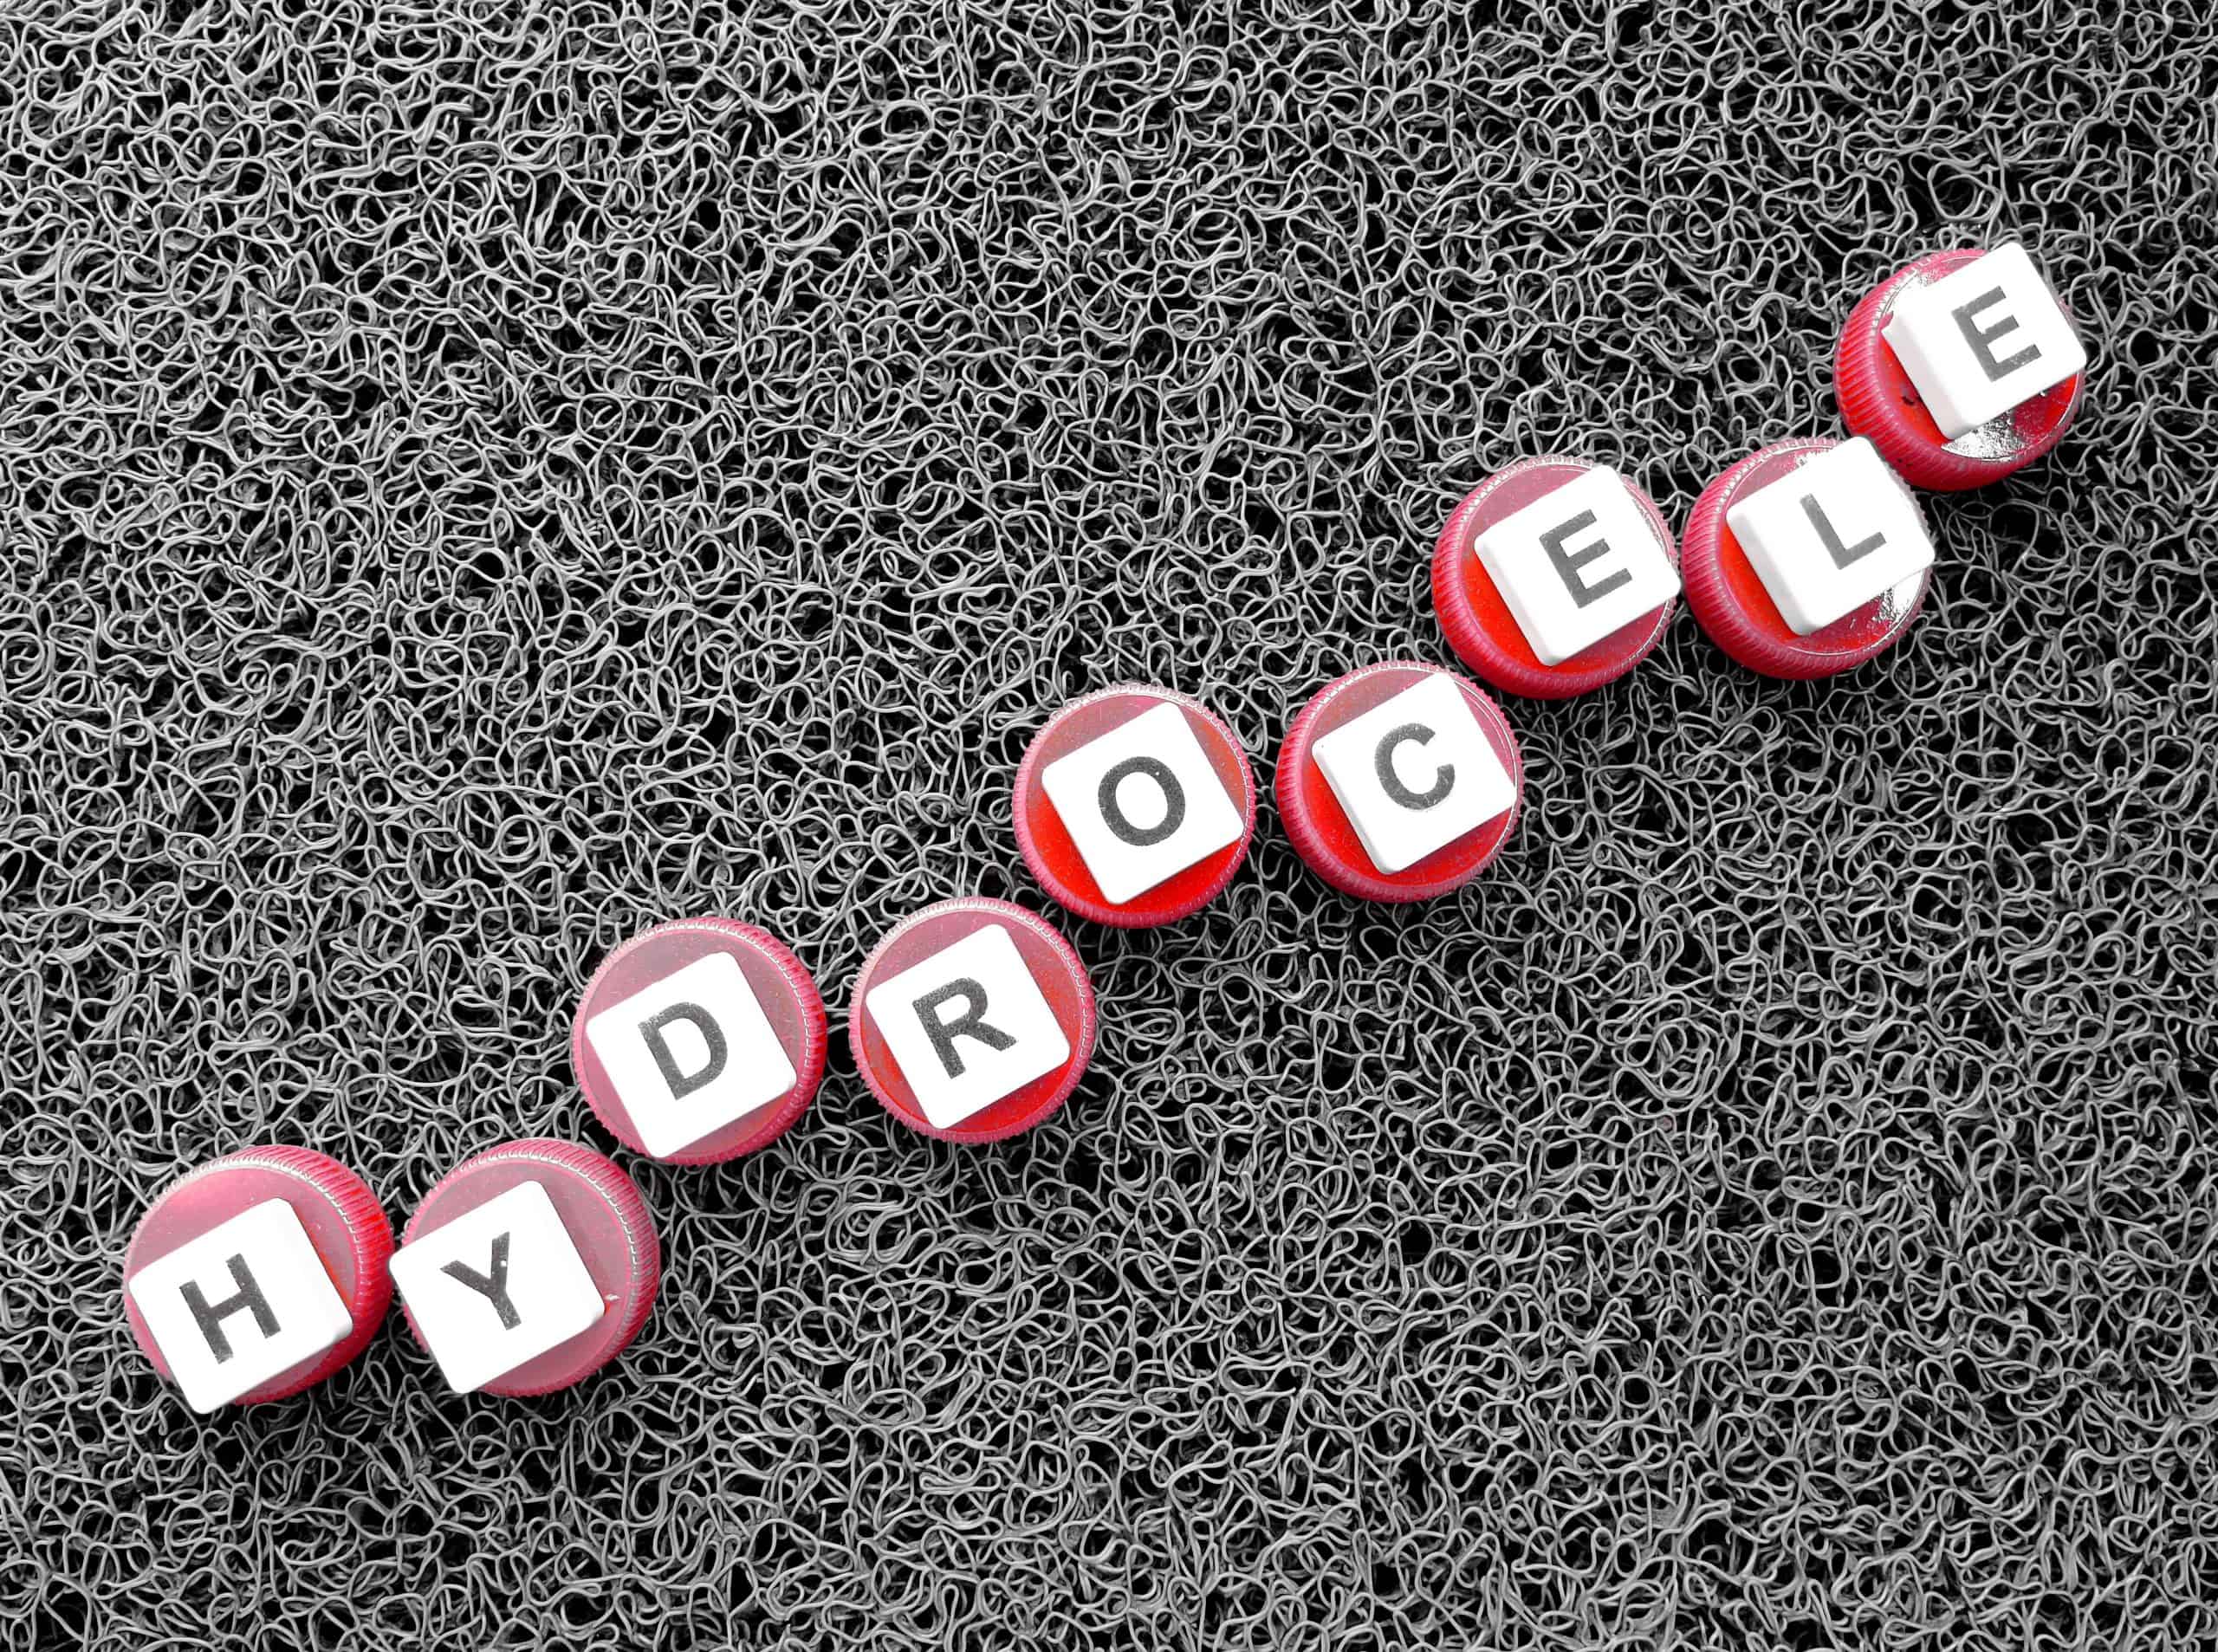 hidrokela - uzrok, simptomi, liječenje